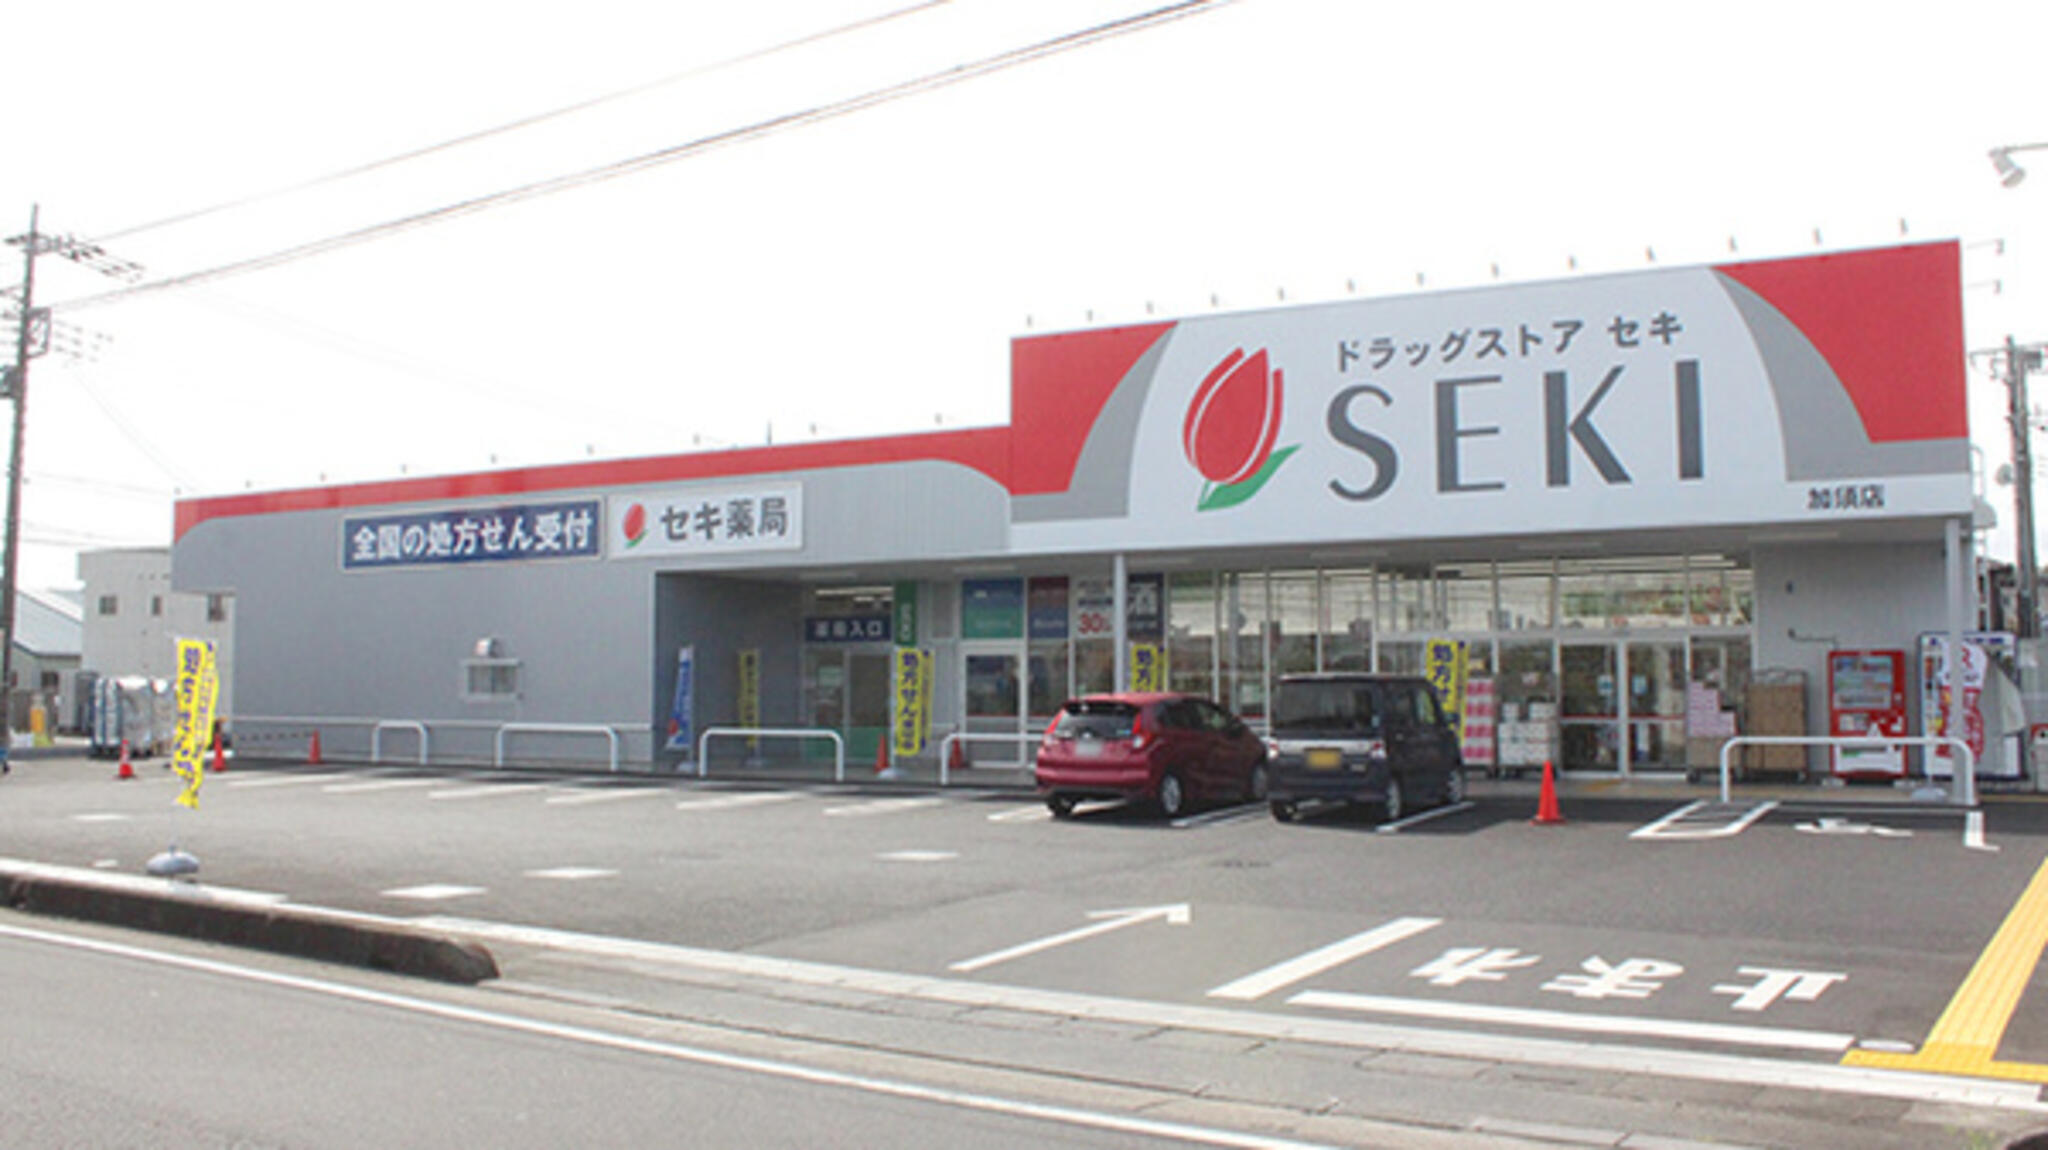 セキ薬局 加須店の代表写真3